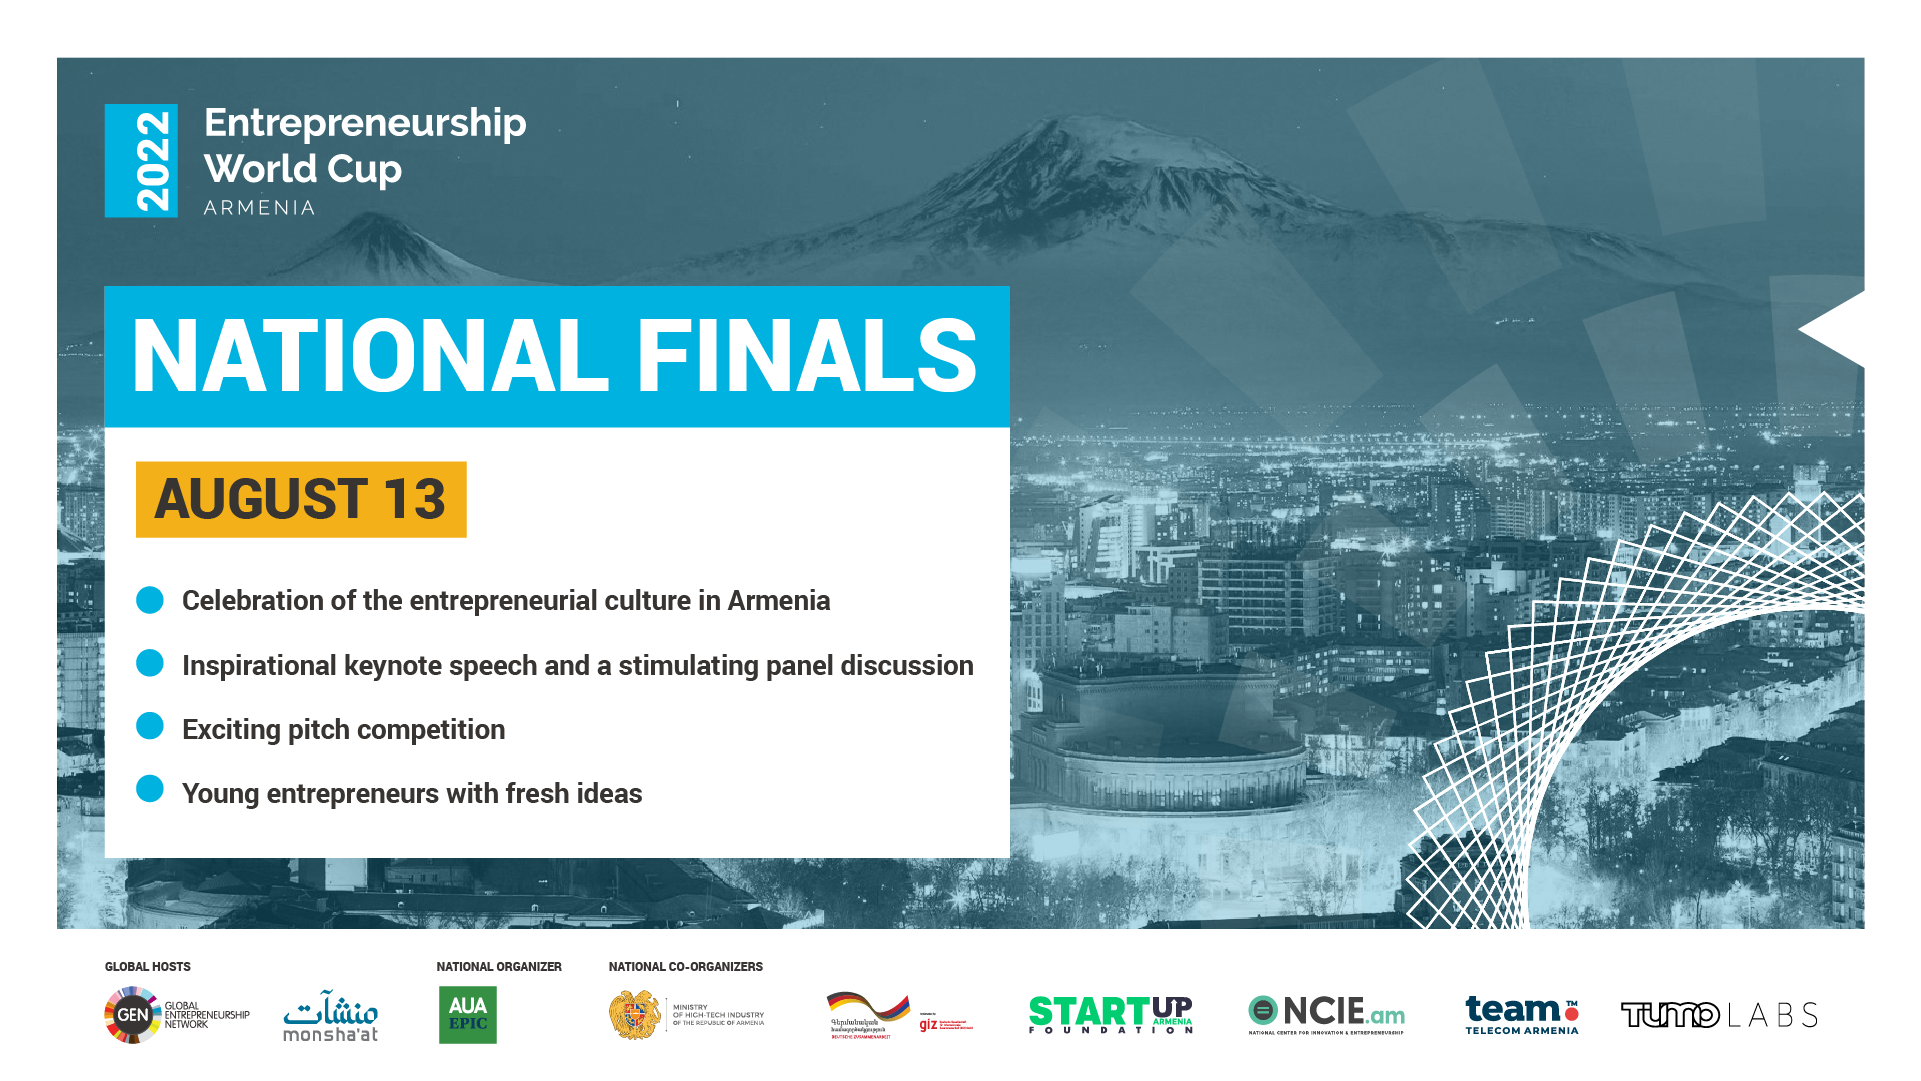 Entrepreneurship World Cup (EWC) Armenia 2022 National Finals - American University of Armenia Large Auditorium August 13